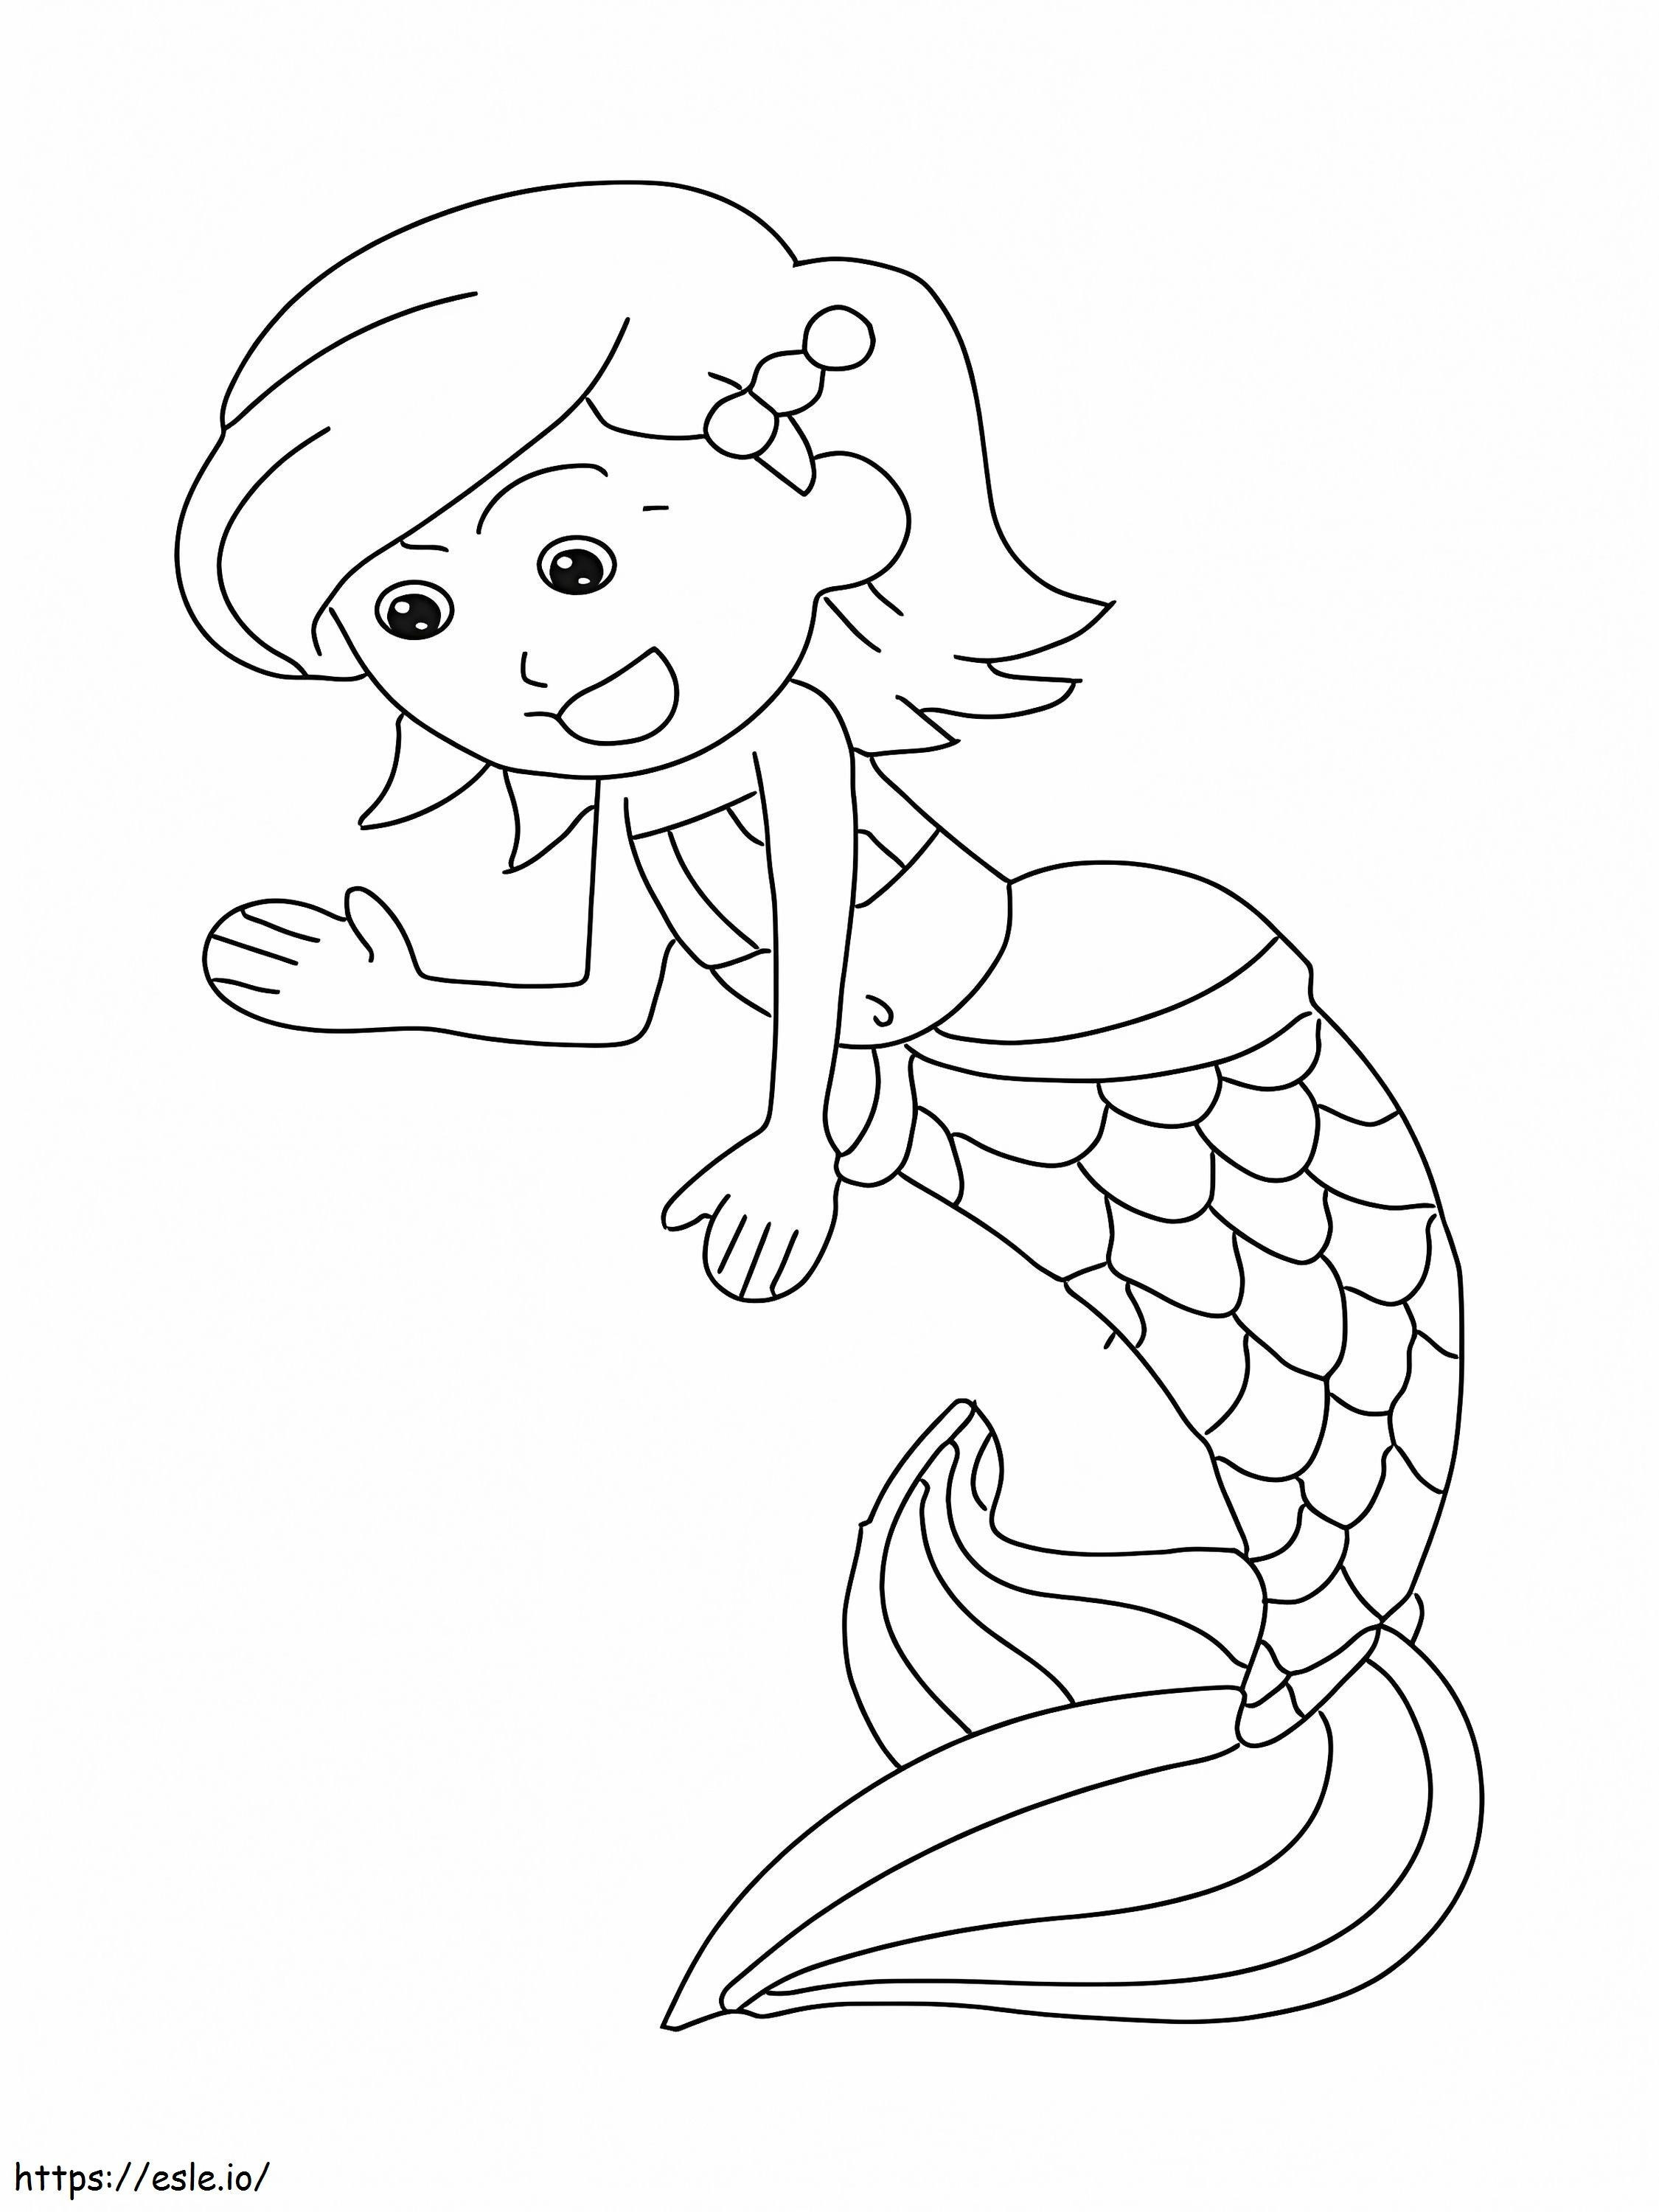 Cheerful Mermaid coloring page